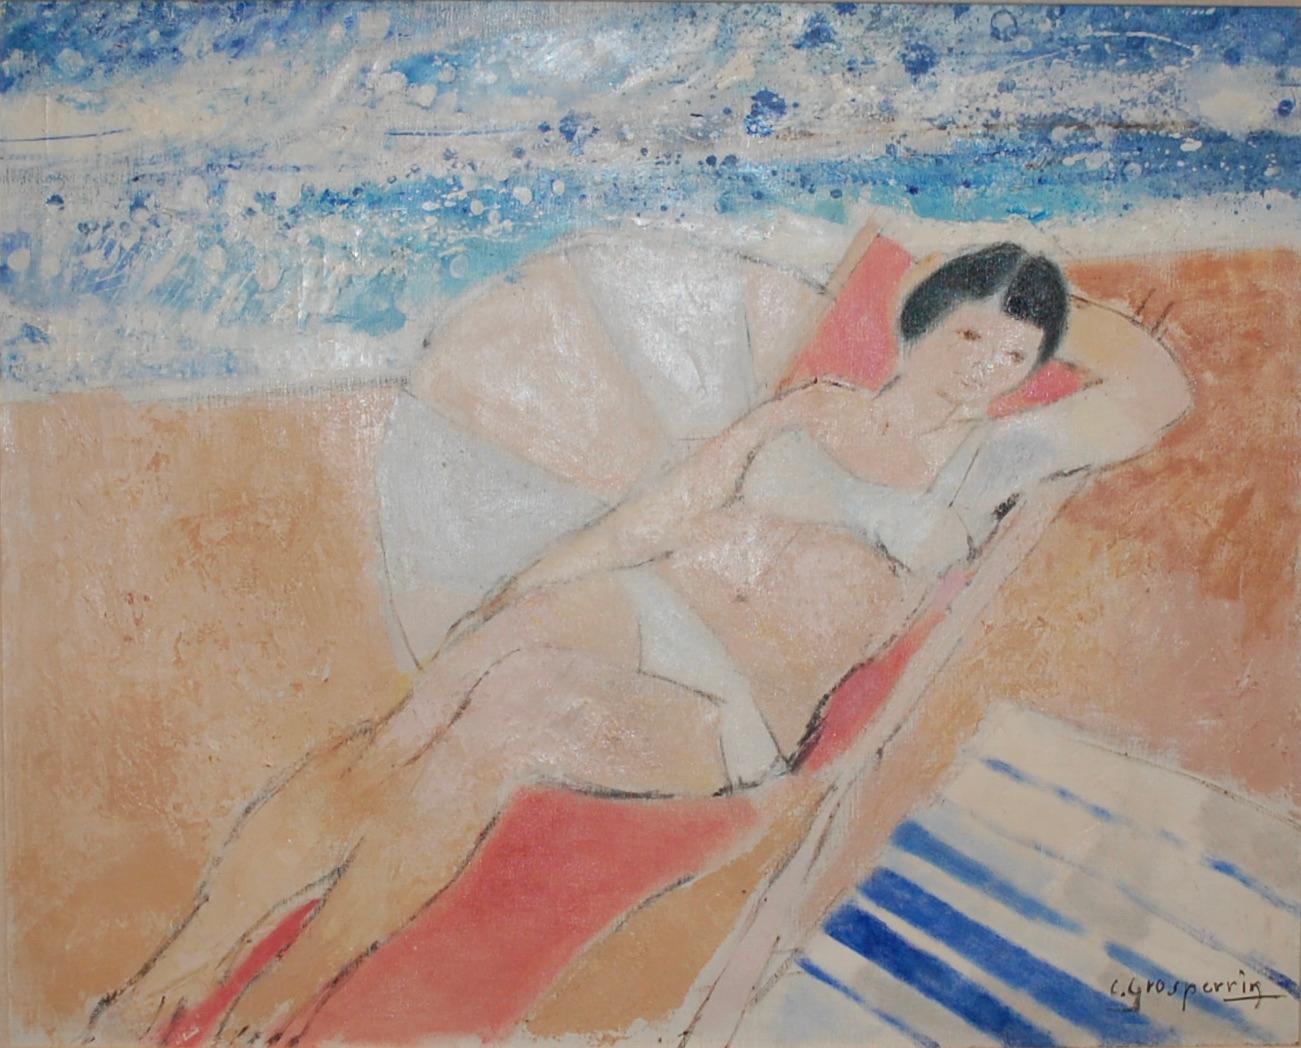 Frau am Strand – Painting von claude GROSPERRIN